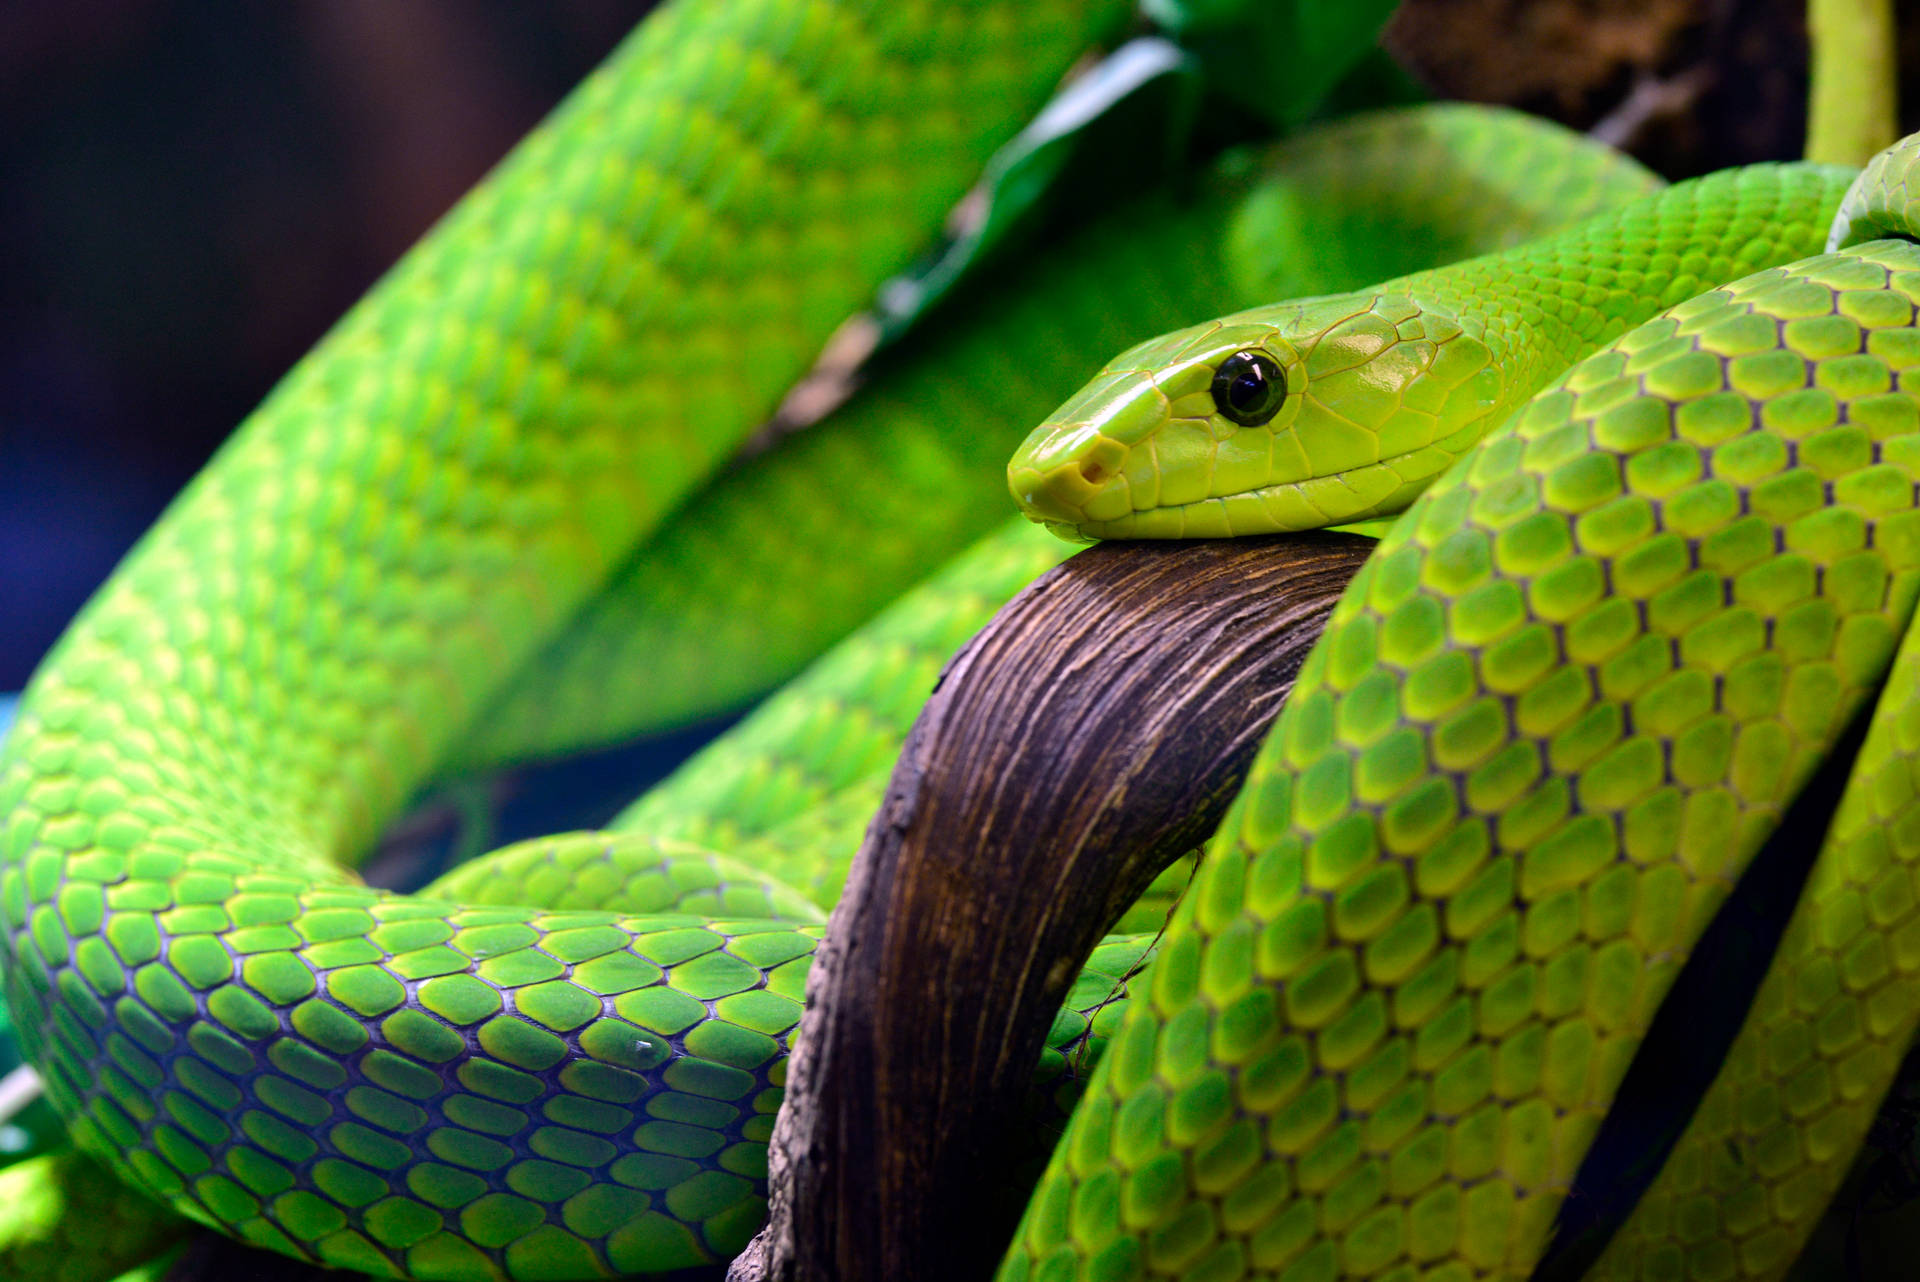 Stunning Green Scaly Snake Wallpaper